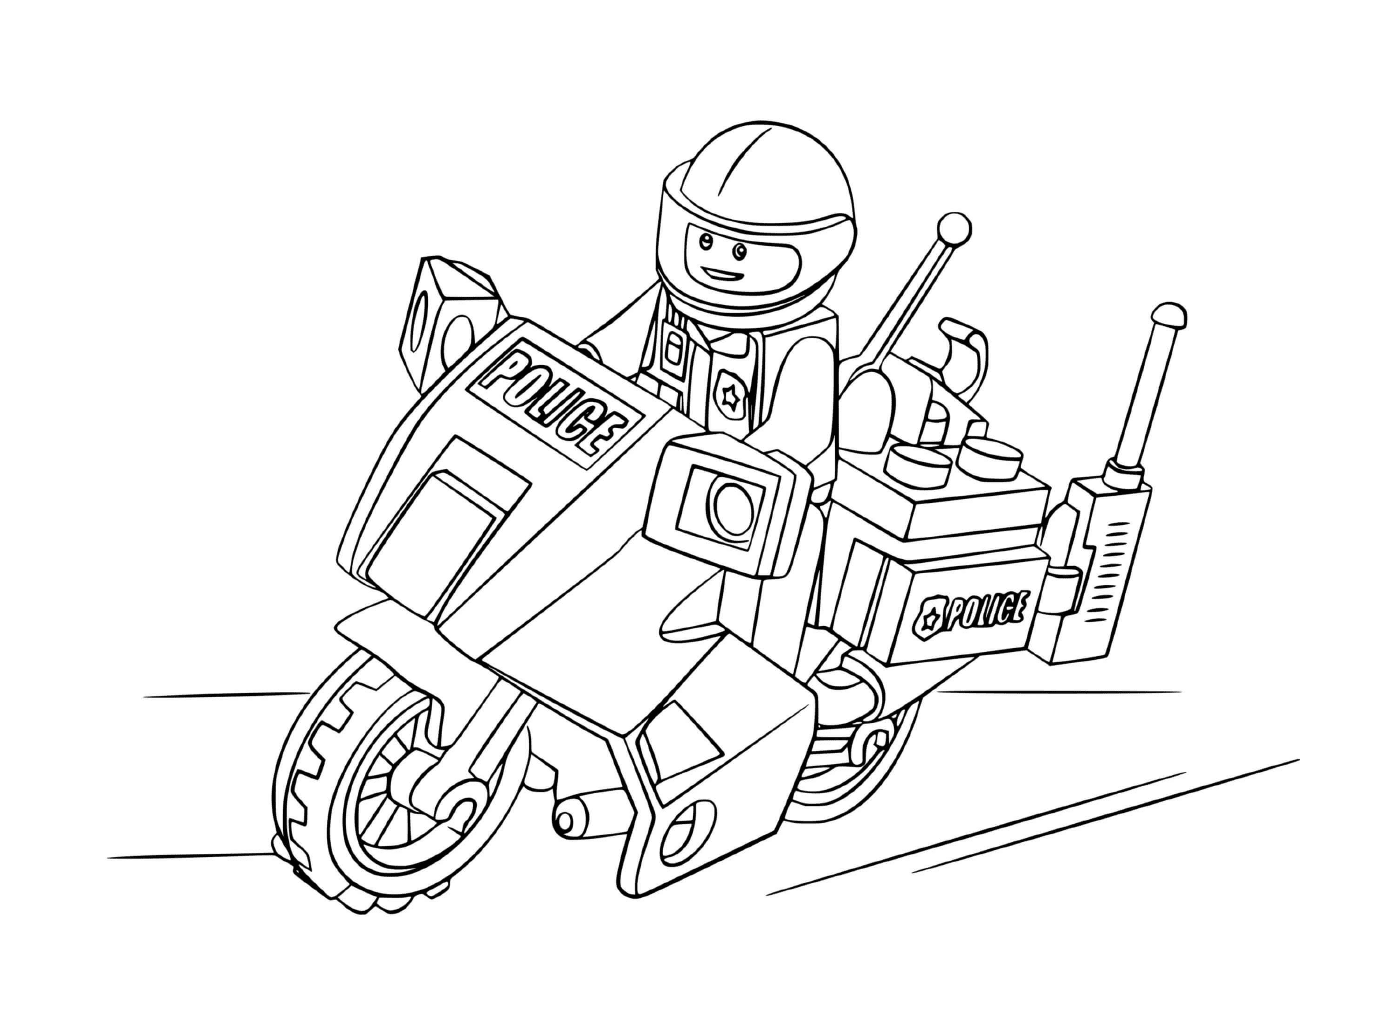   Police Lego en moto 